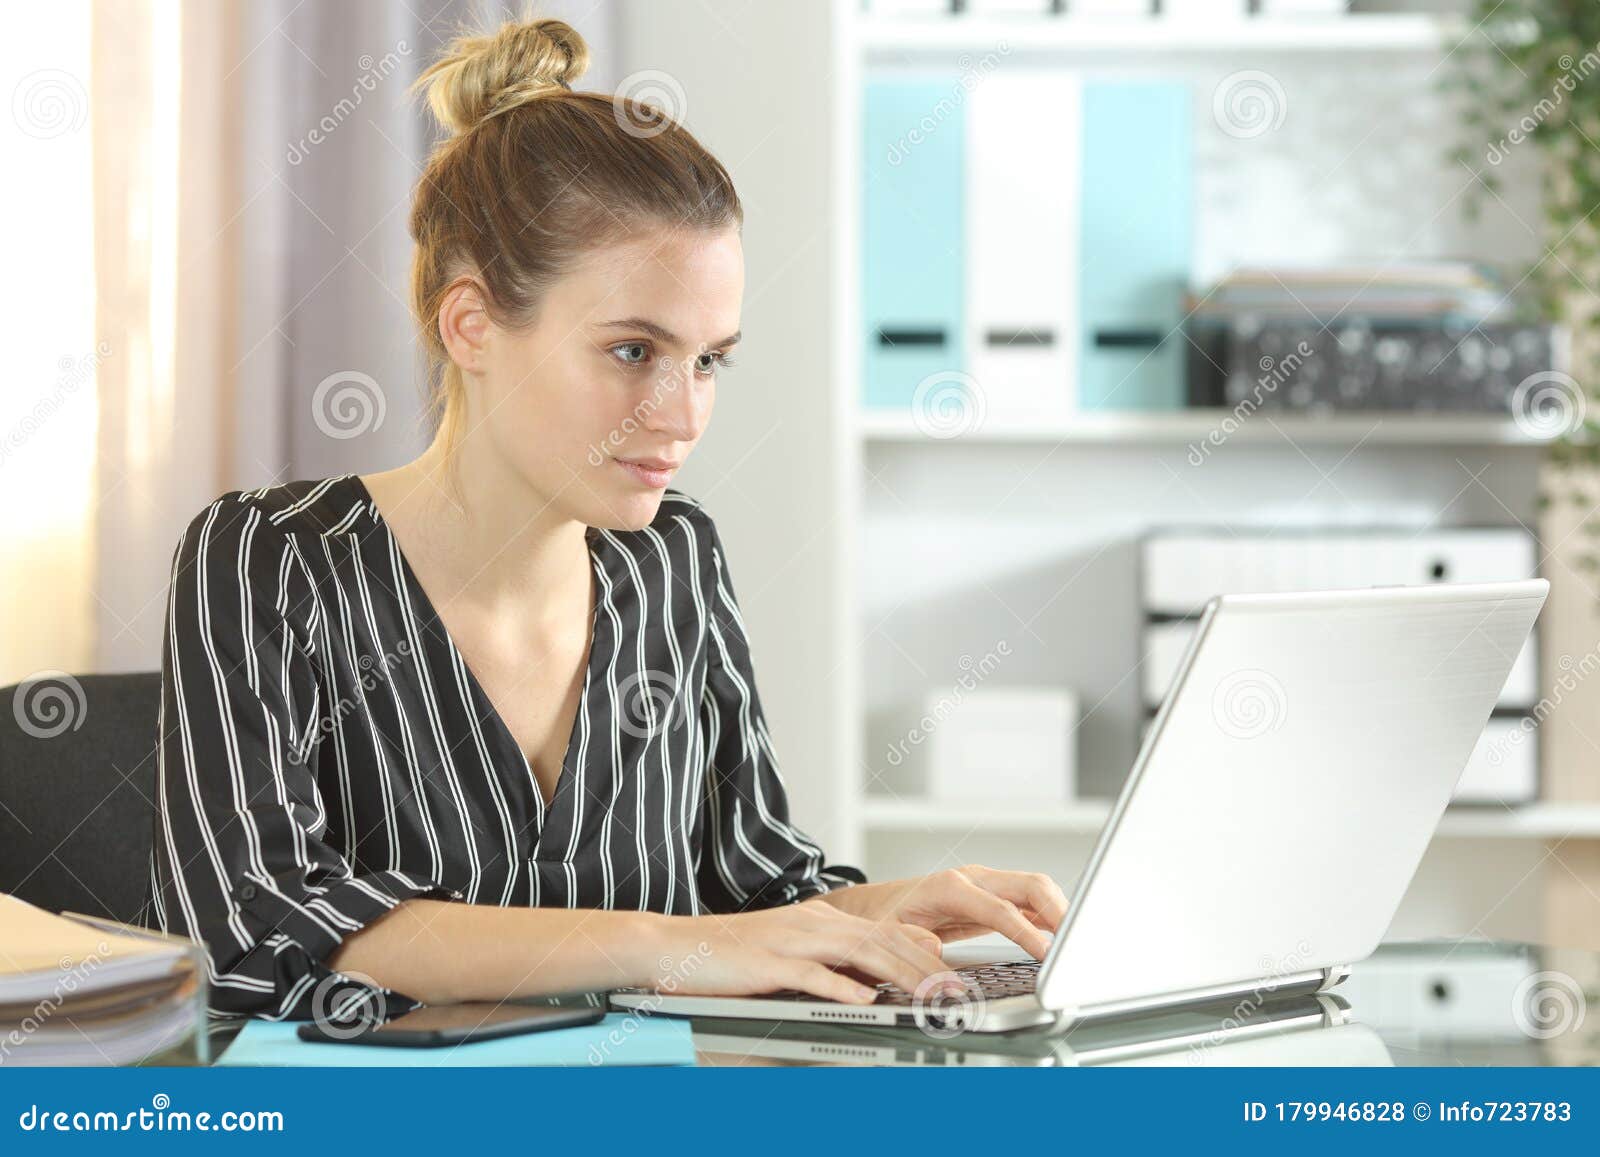 entrepreneur working on laptop at homeoffice